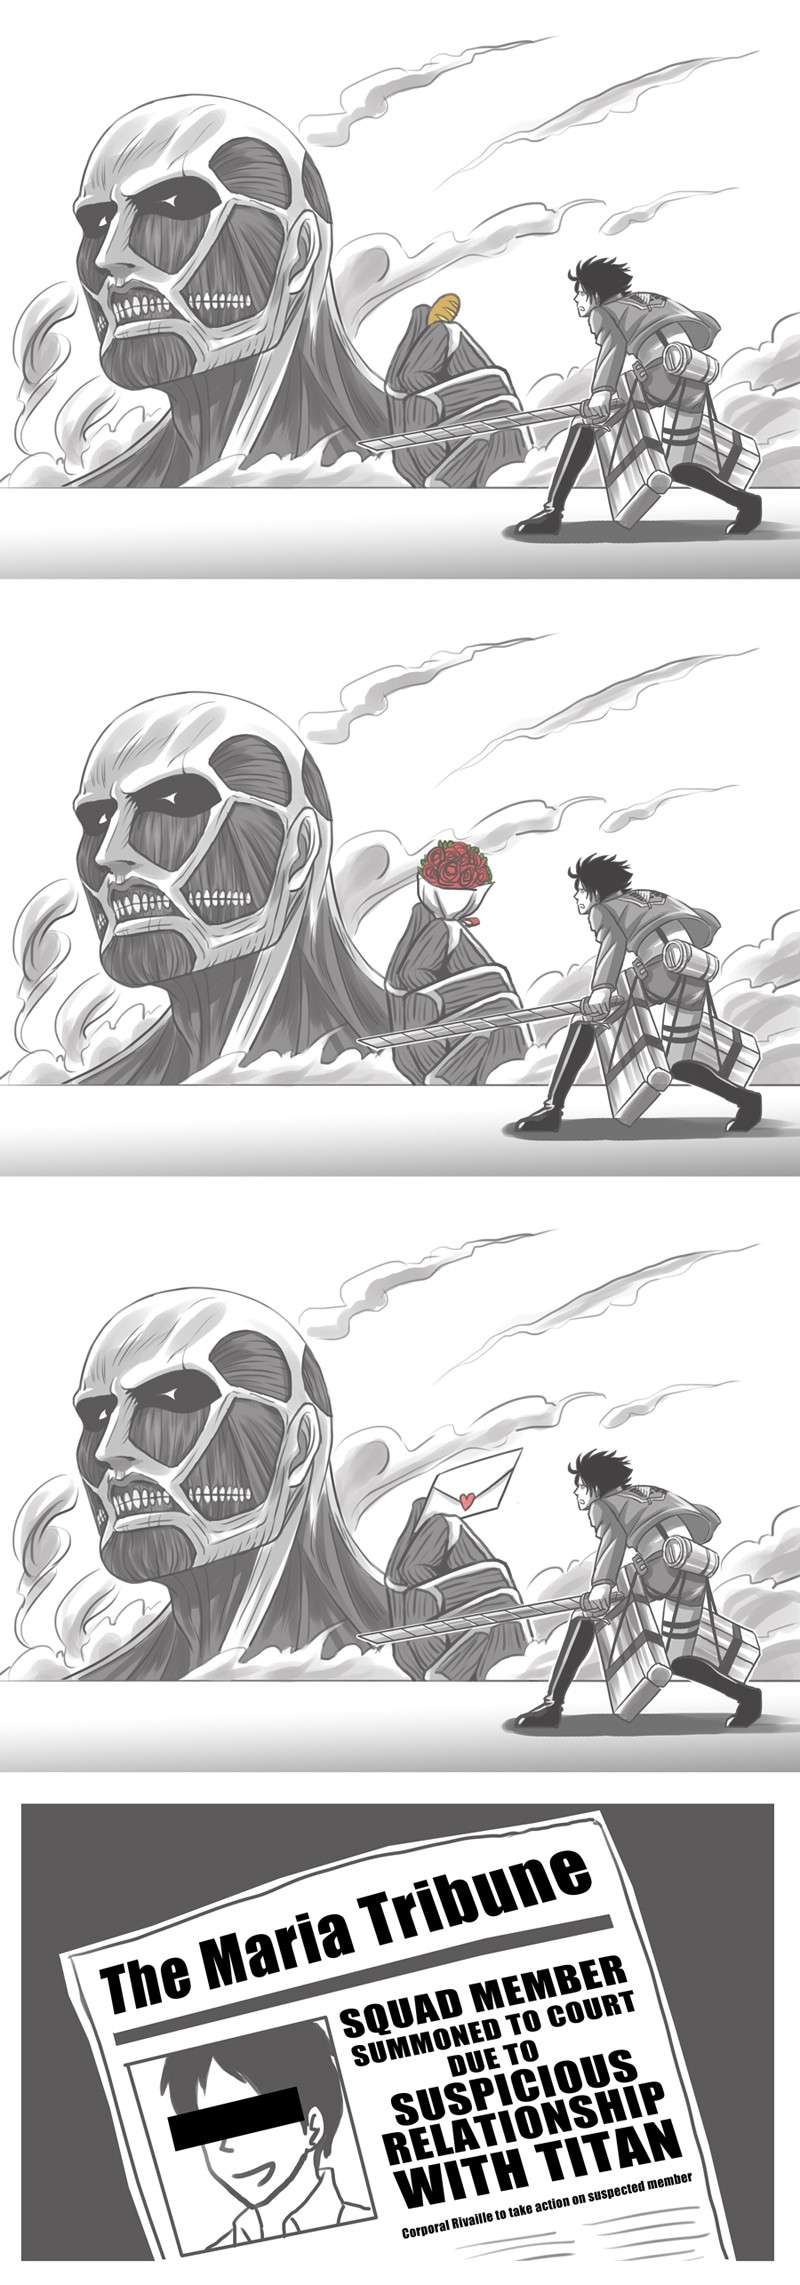 [Animé & Manga] L'attaque des titans - Page 10 Ganbat10